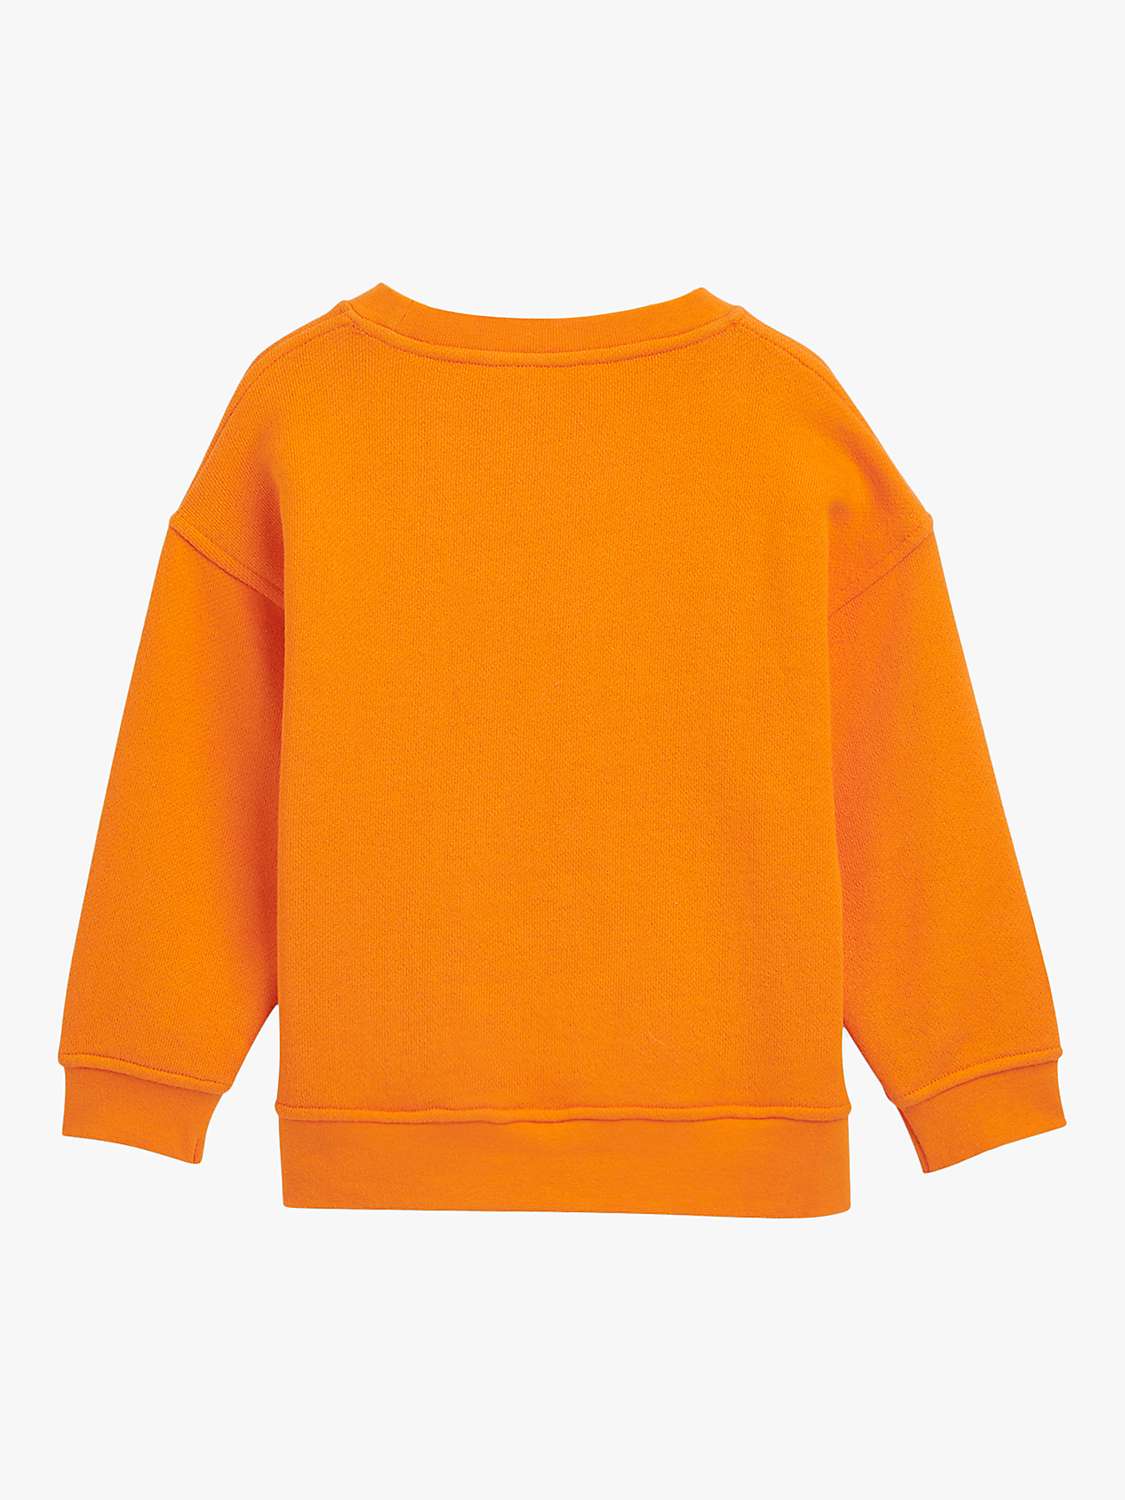 Buy Whistles Kids' Sunny Sweatshirt, Orange Online at johnlewis.com